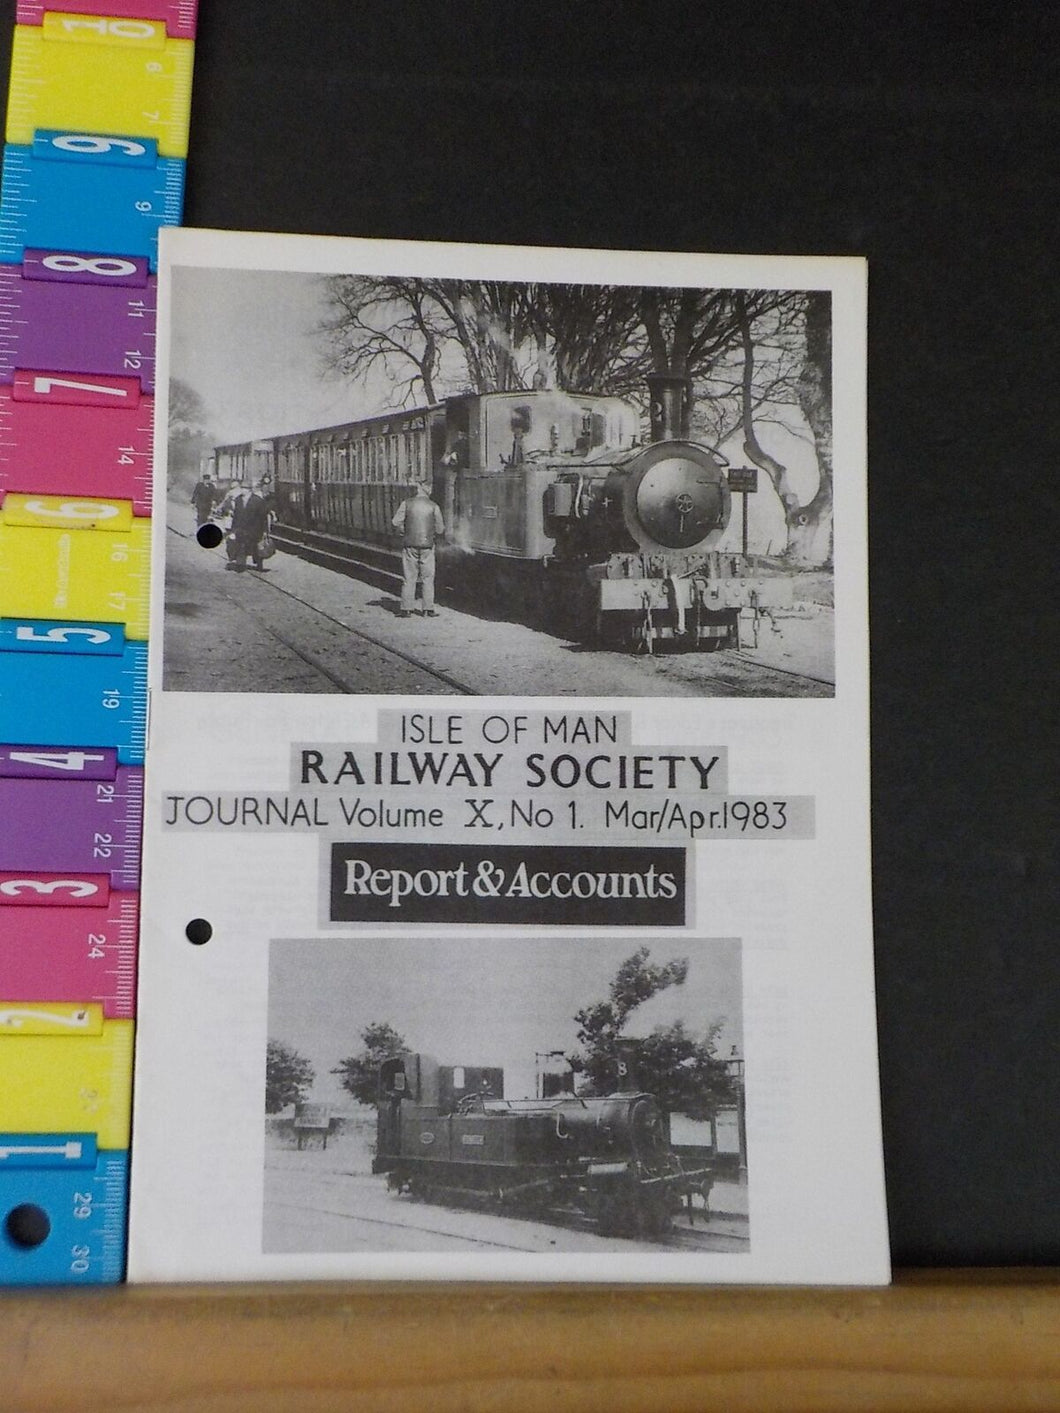 Isle of Man Railway Society Journal 1983 Mar/Apr Volume X No.1